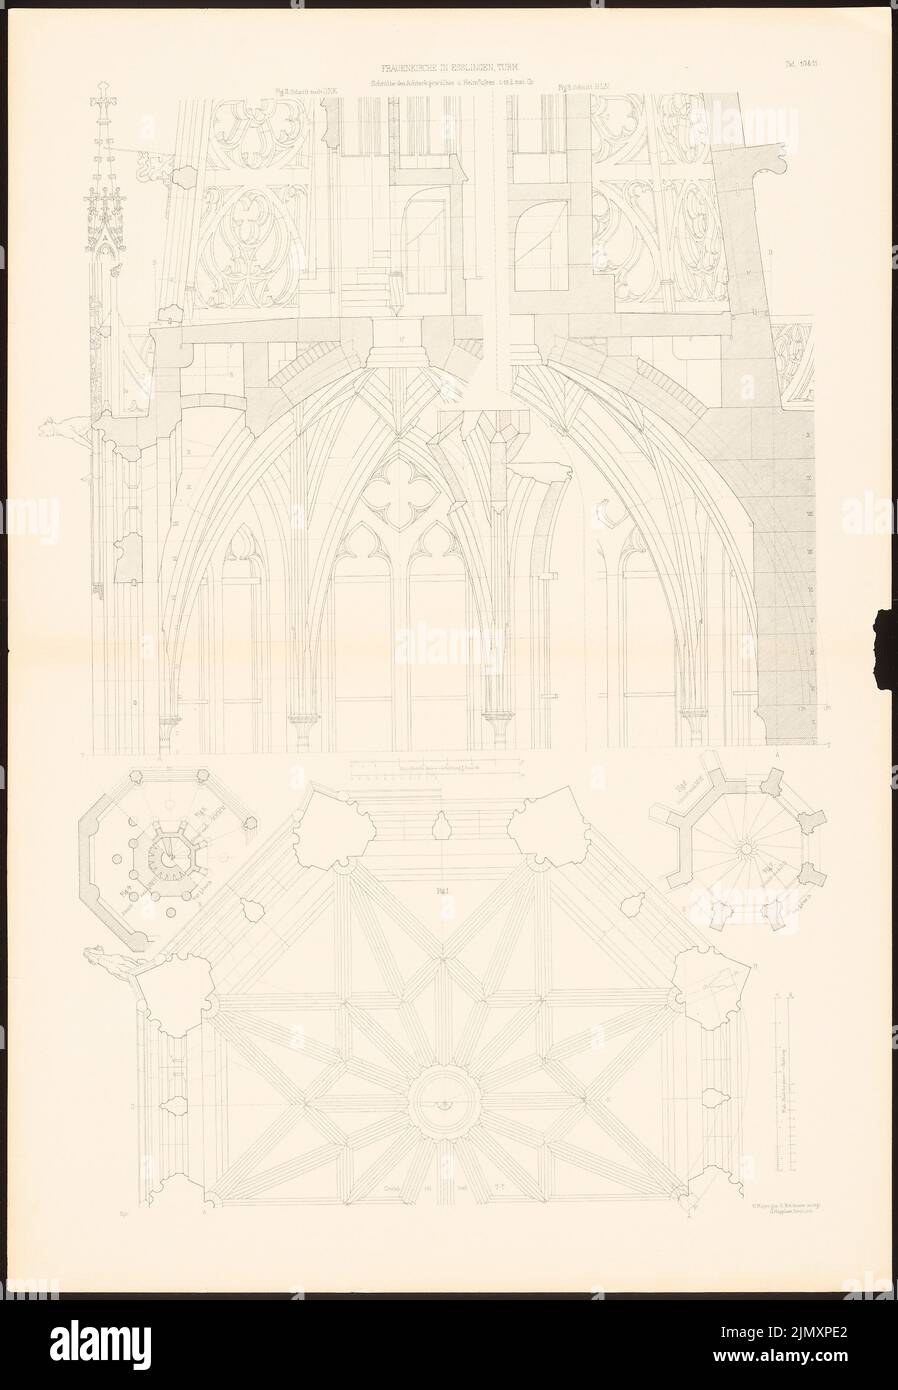 Egle Joseph von (1818-1899), Frauenkirche in Esslingen (1898-1898): Cut of the octagon vault and helmet foot. Pressure on paper, 102.9 x 71.1 cm (including scan edges) Stock Photo